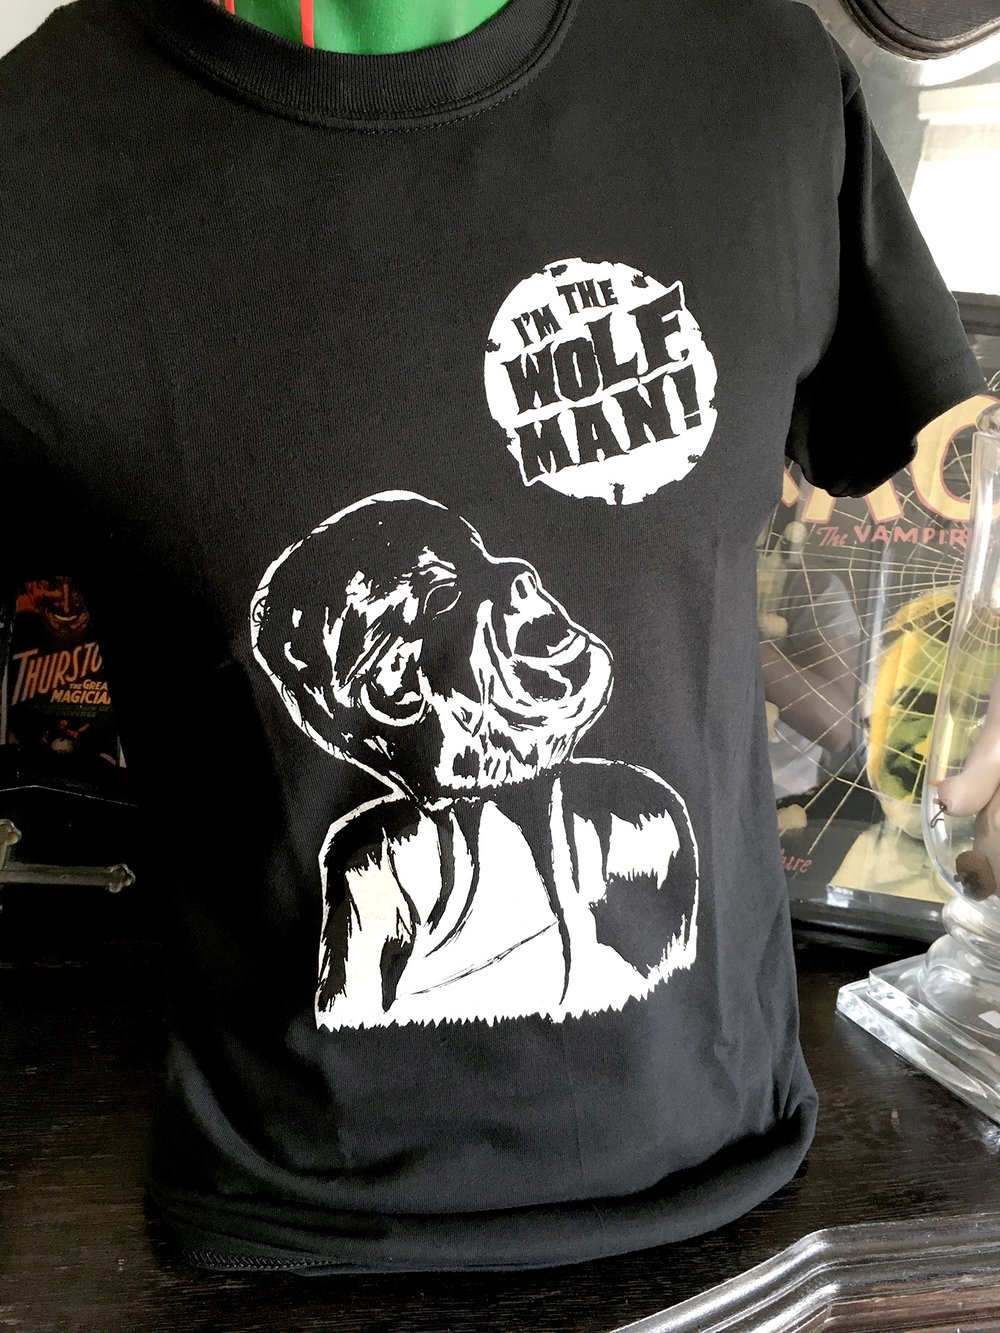 "I'm The Wolf, Man!" T-shirt